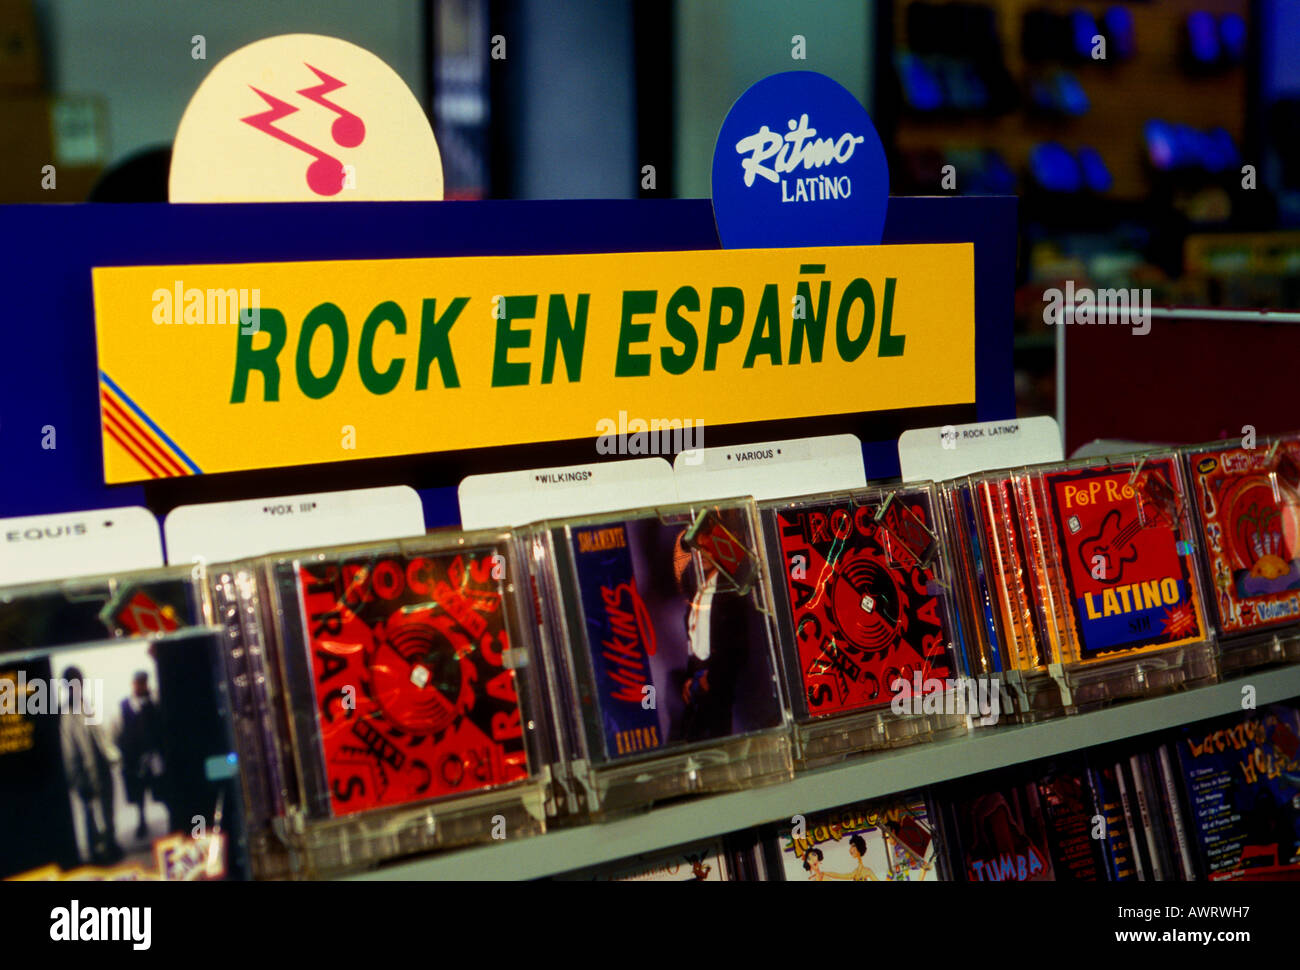 Rock en Espanol, Spanische Musik, Latin American Rock Musik, Rock and Roll Music, Music Store, Mission District, San Francisco, Kalifornien Stockfoto